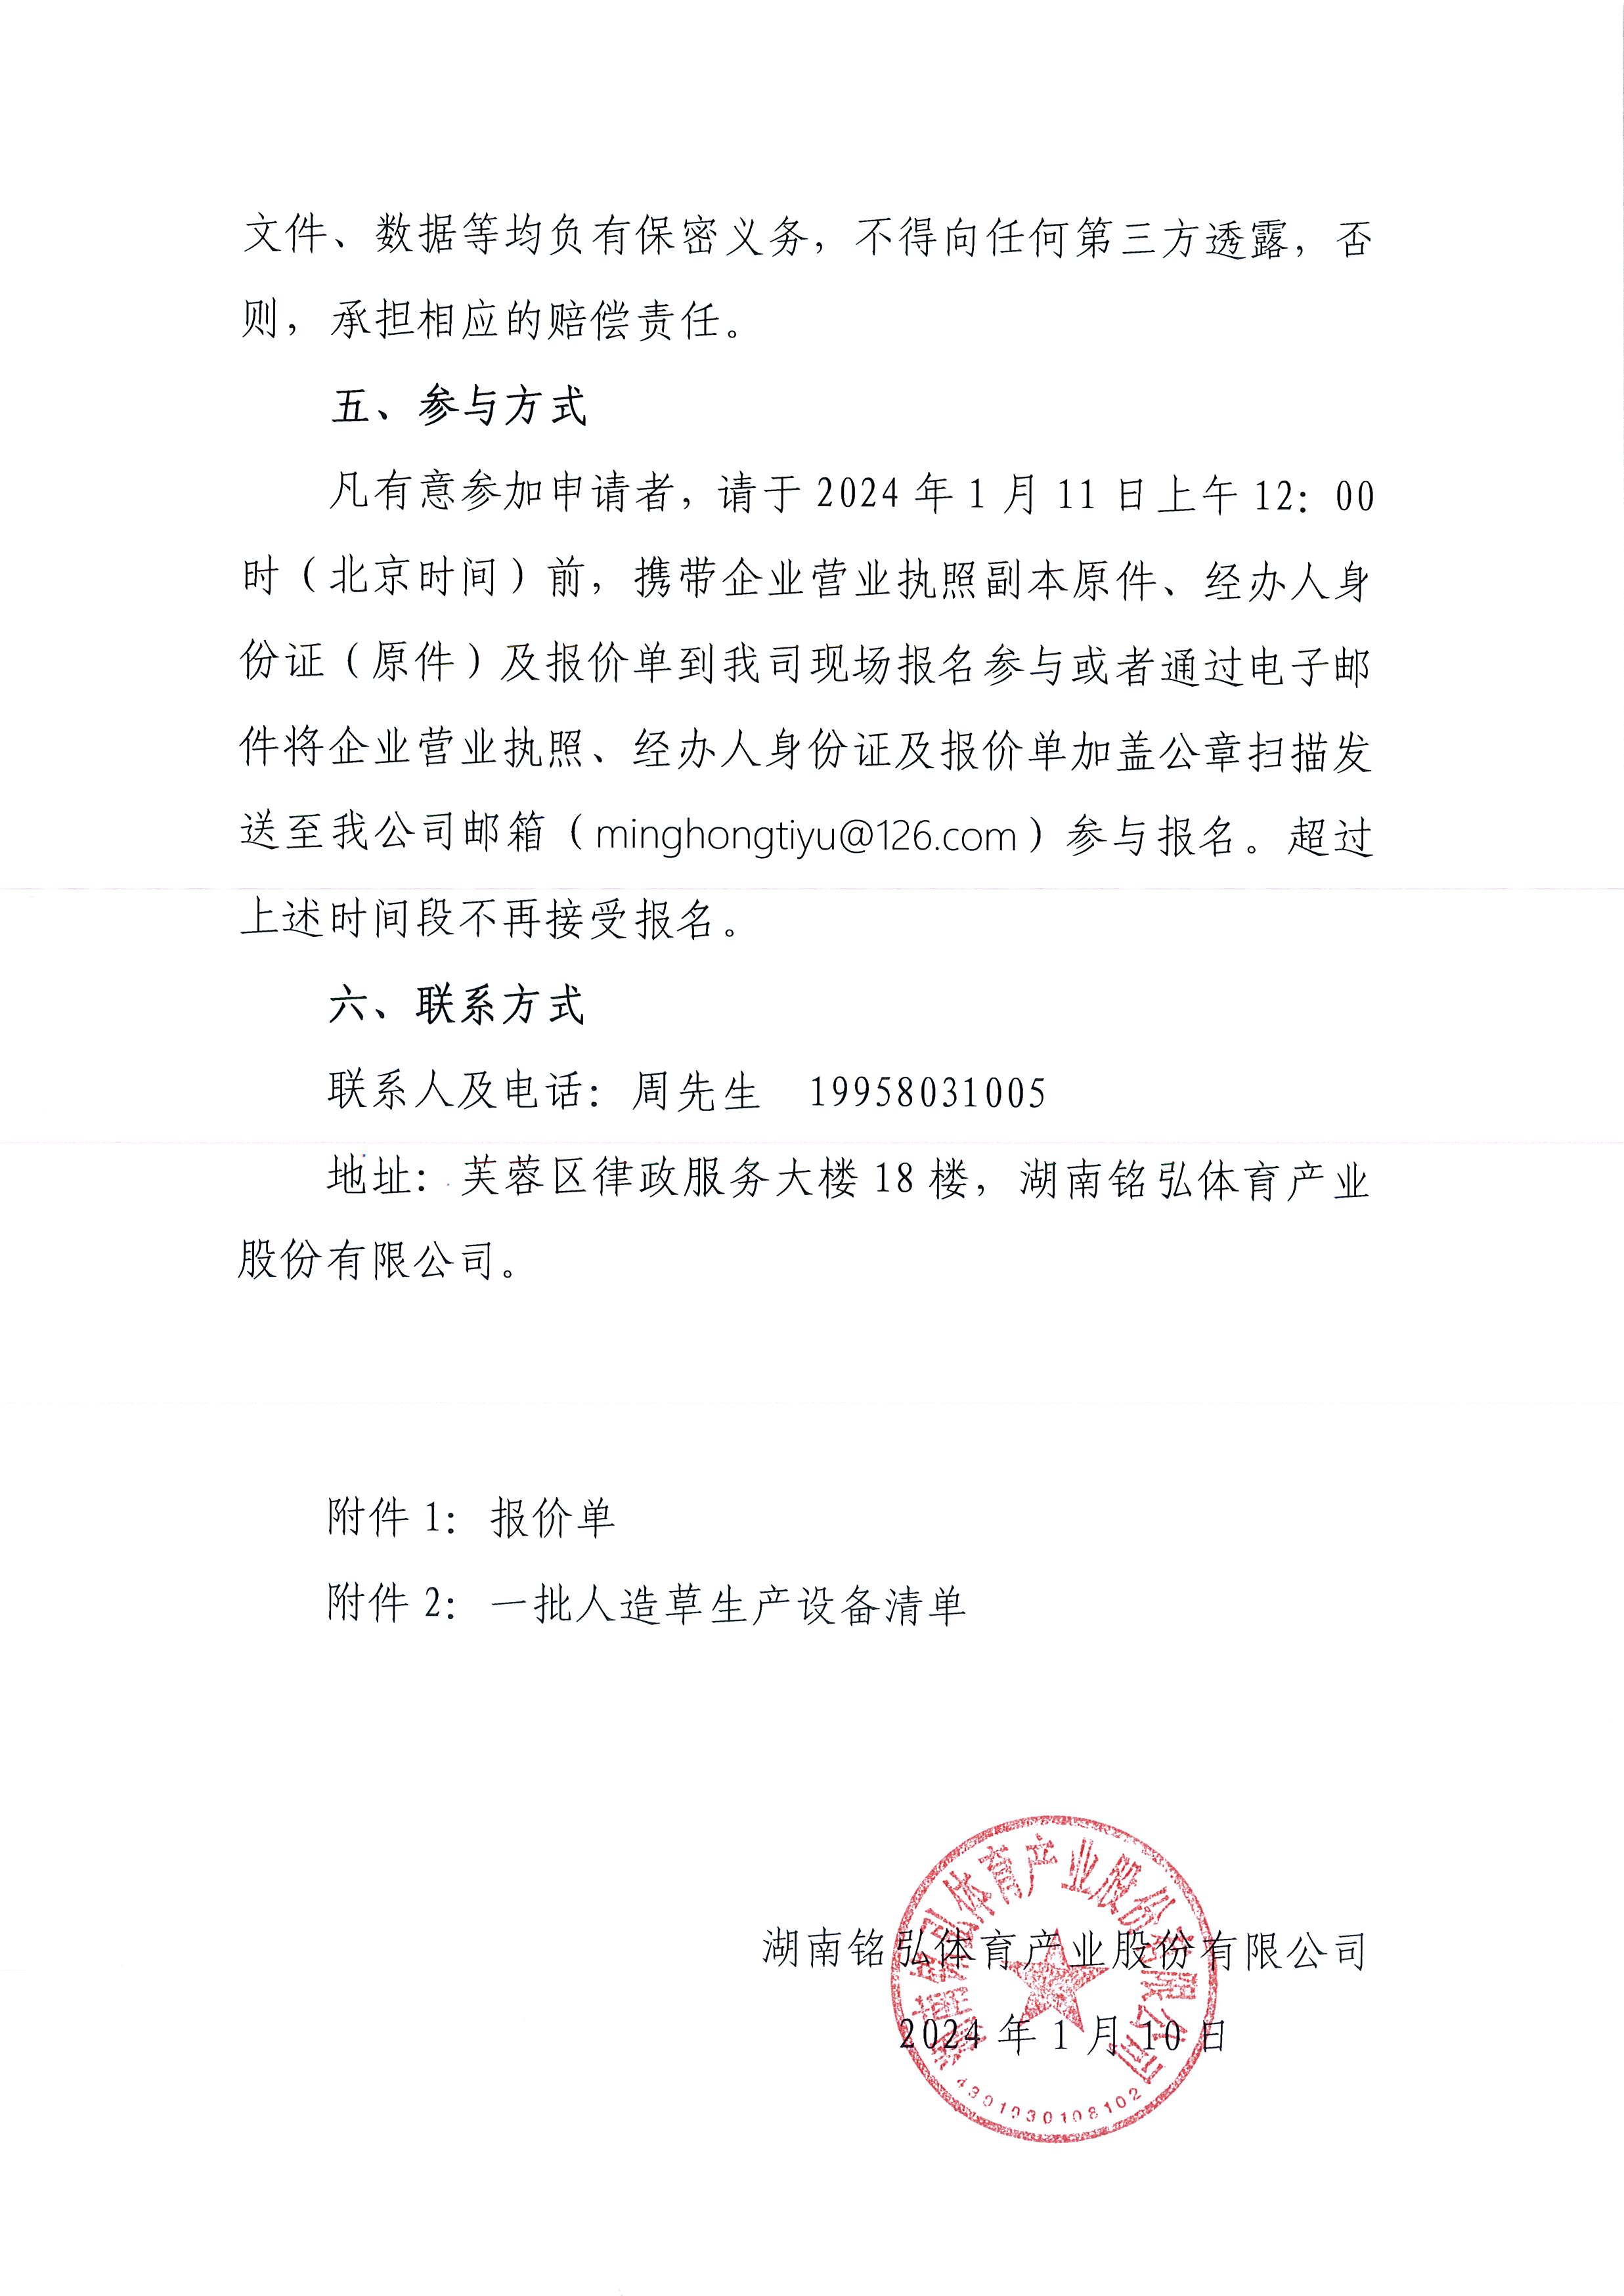 aoa体育(中国)股份有限公司关于处置一批人造草生产设备的询价函3